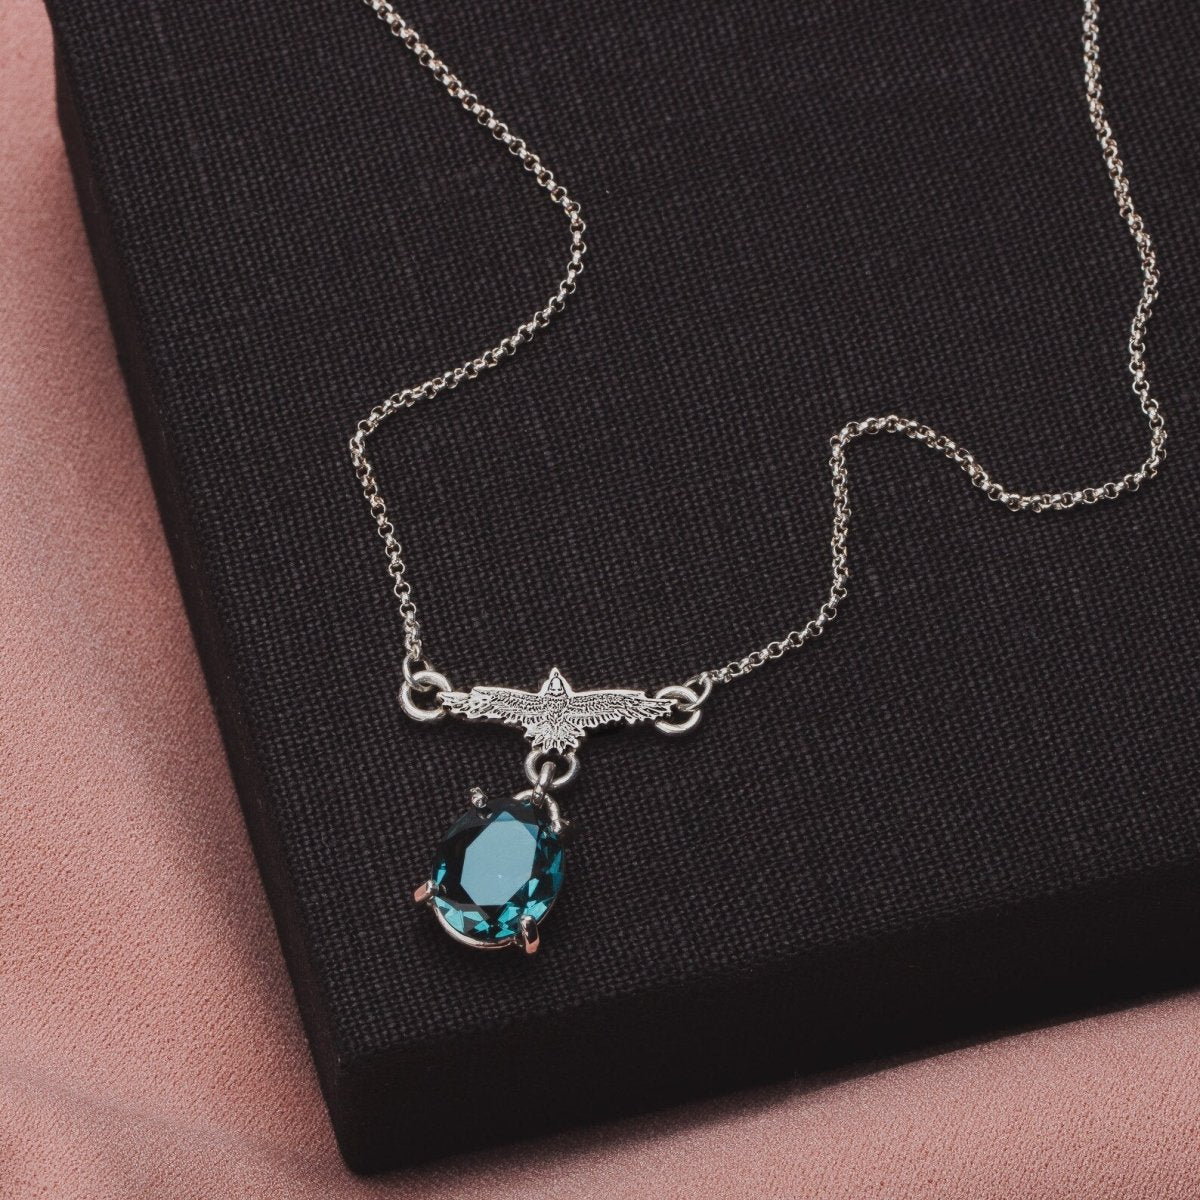 Gemstone Necklaces - Melanie Golden Jewelry - www.melaniegolden.com - United States